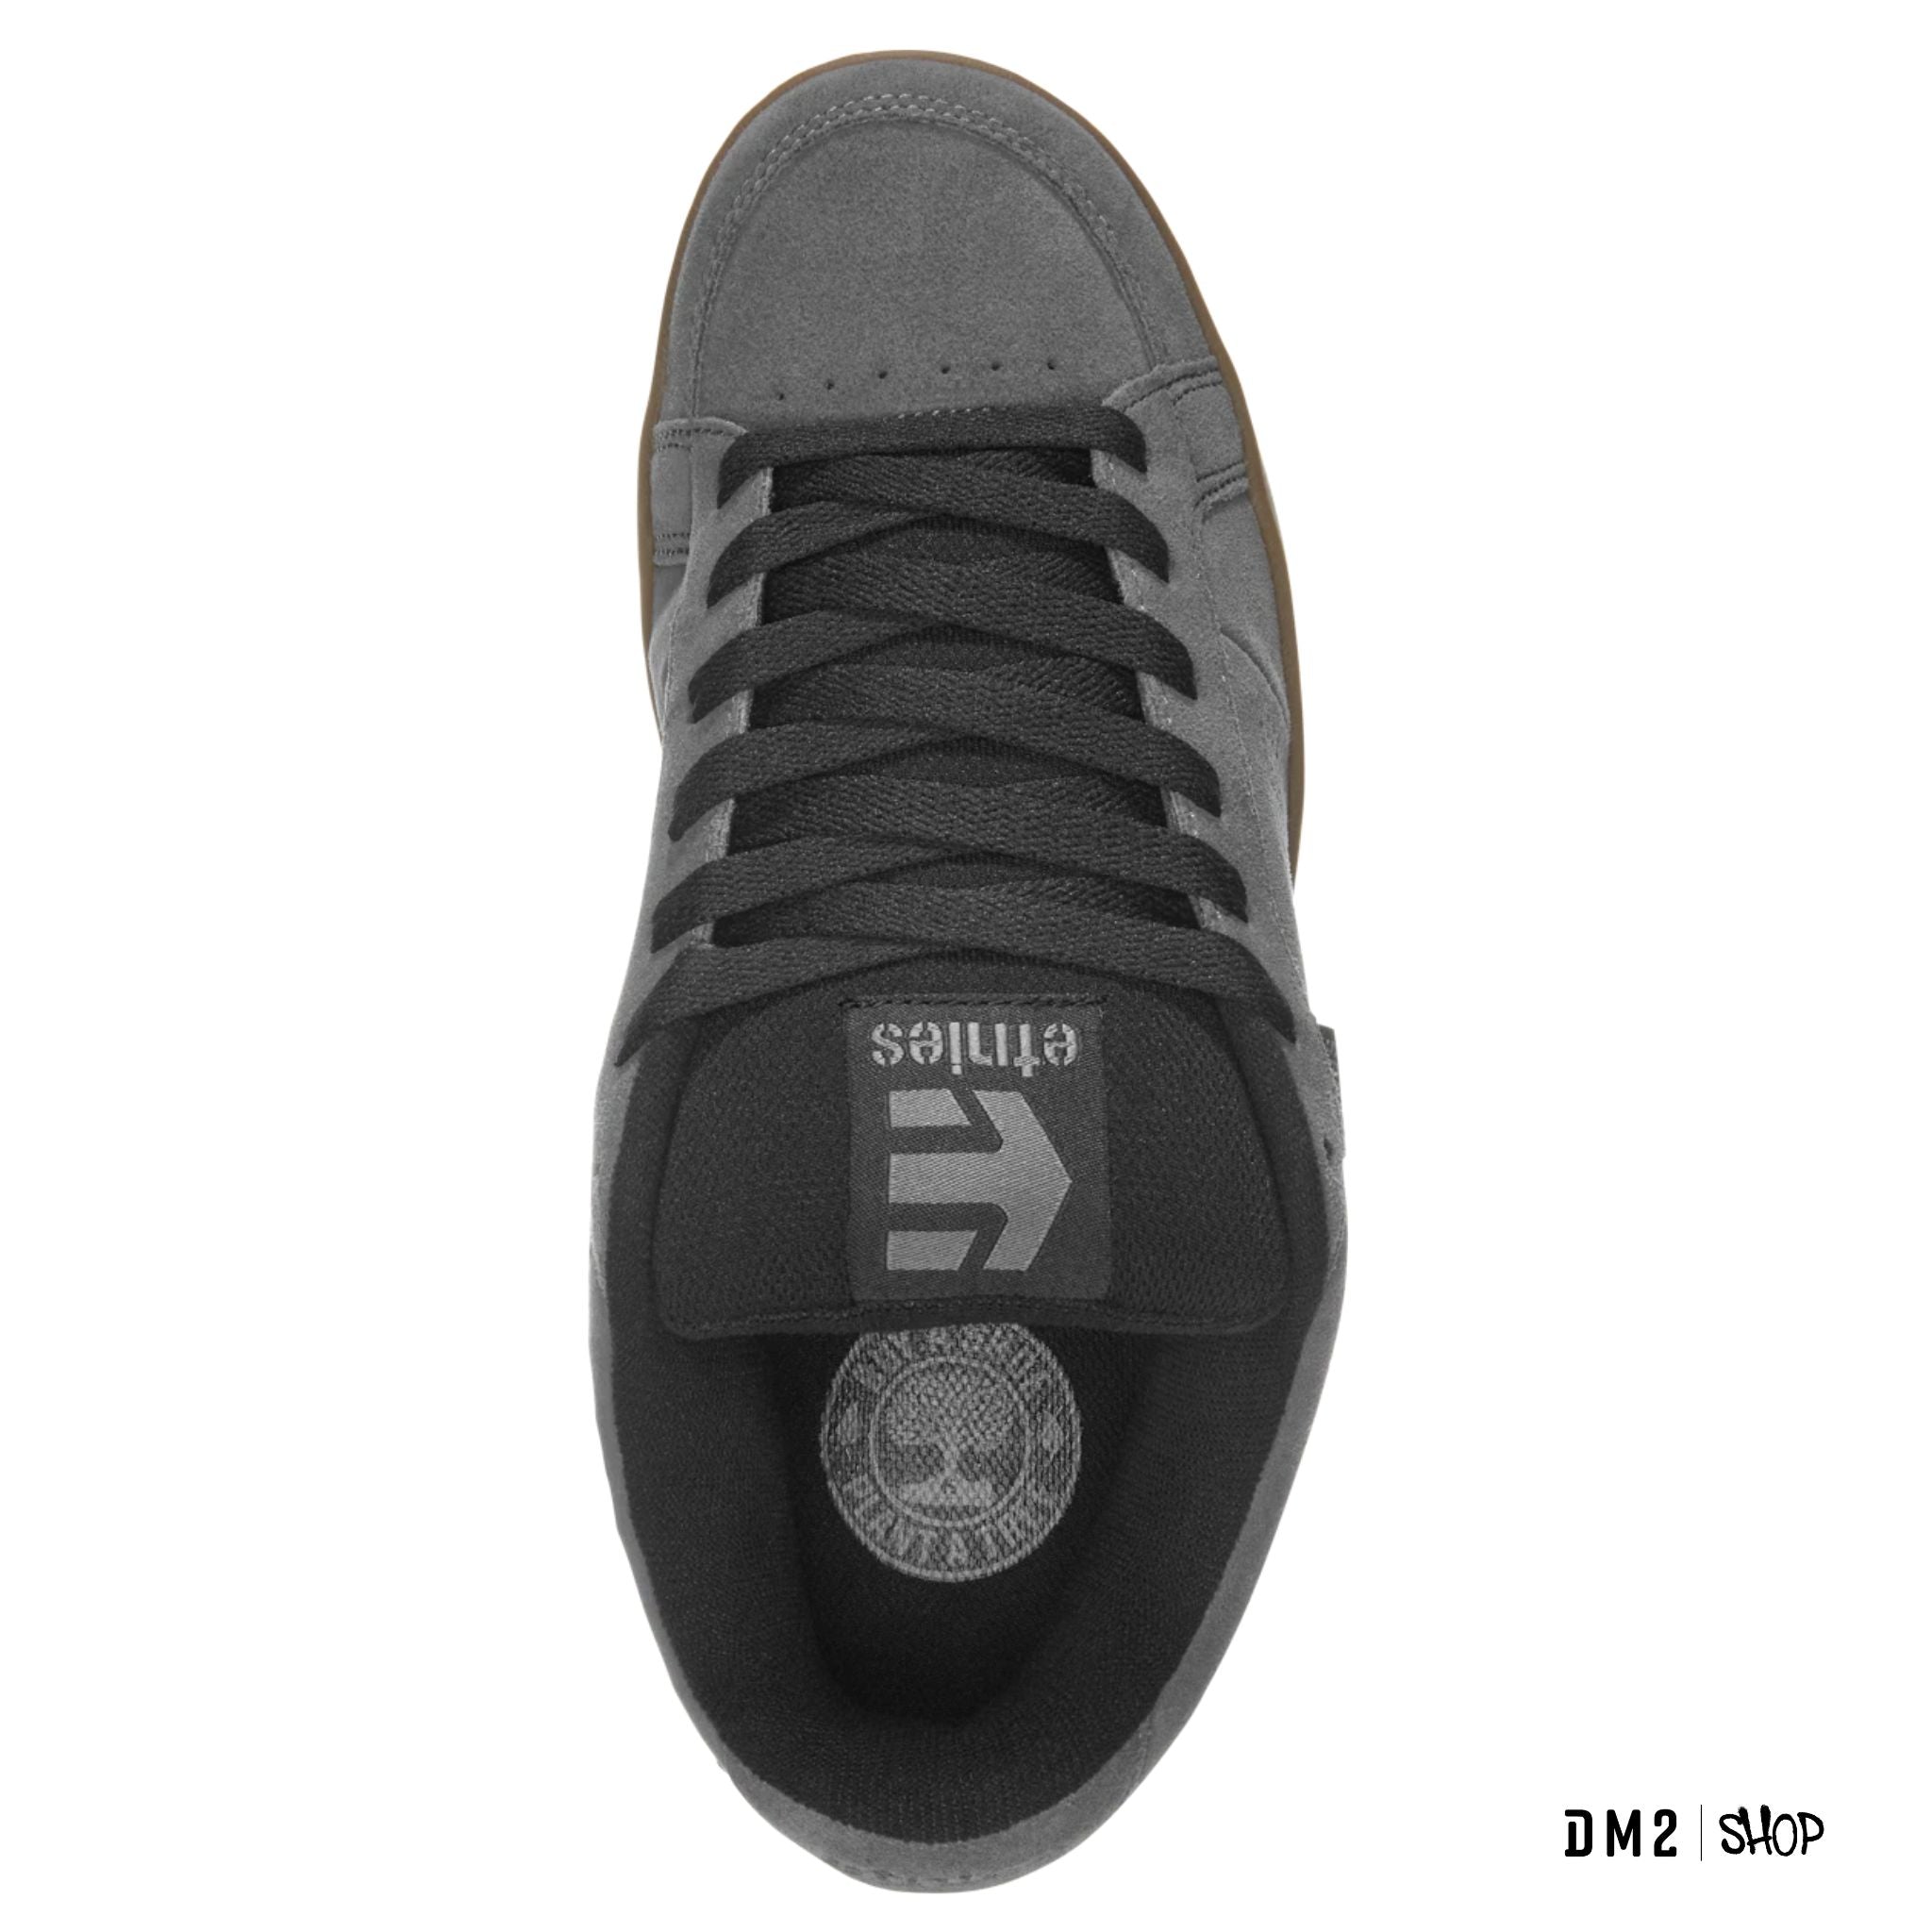 chaussures-kingpin-grey-black-gum-etnies-4101000091-031, SKATE SHOES, SKATE SHOP, DM2 SHOP, 02